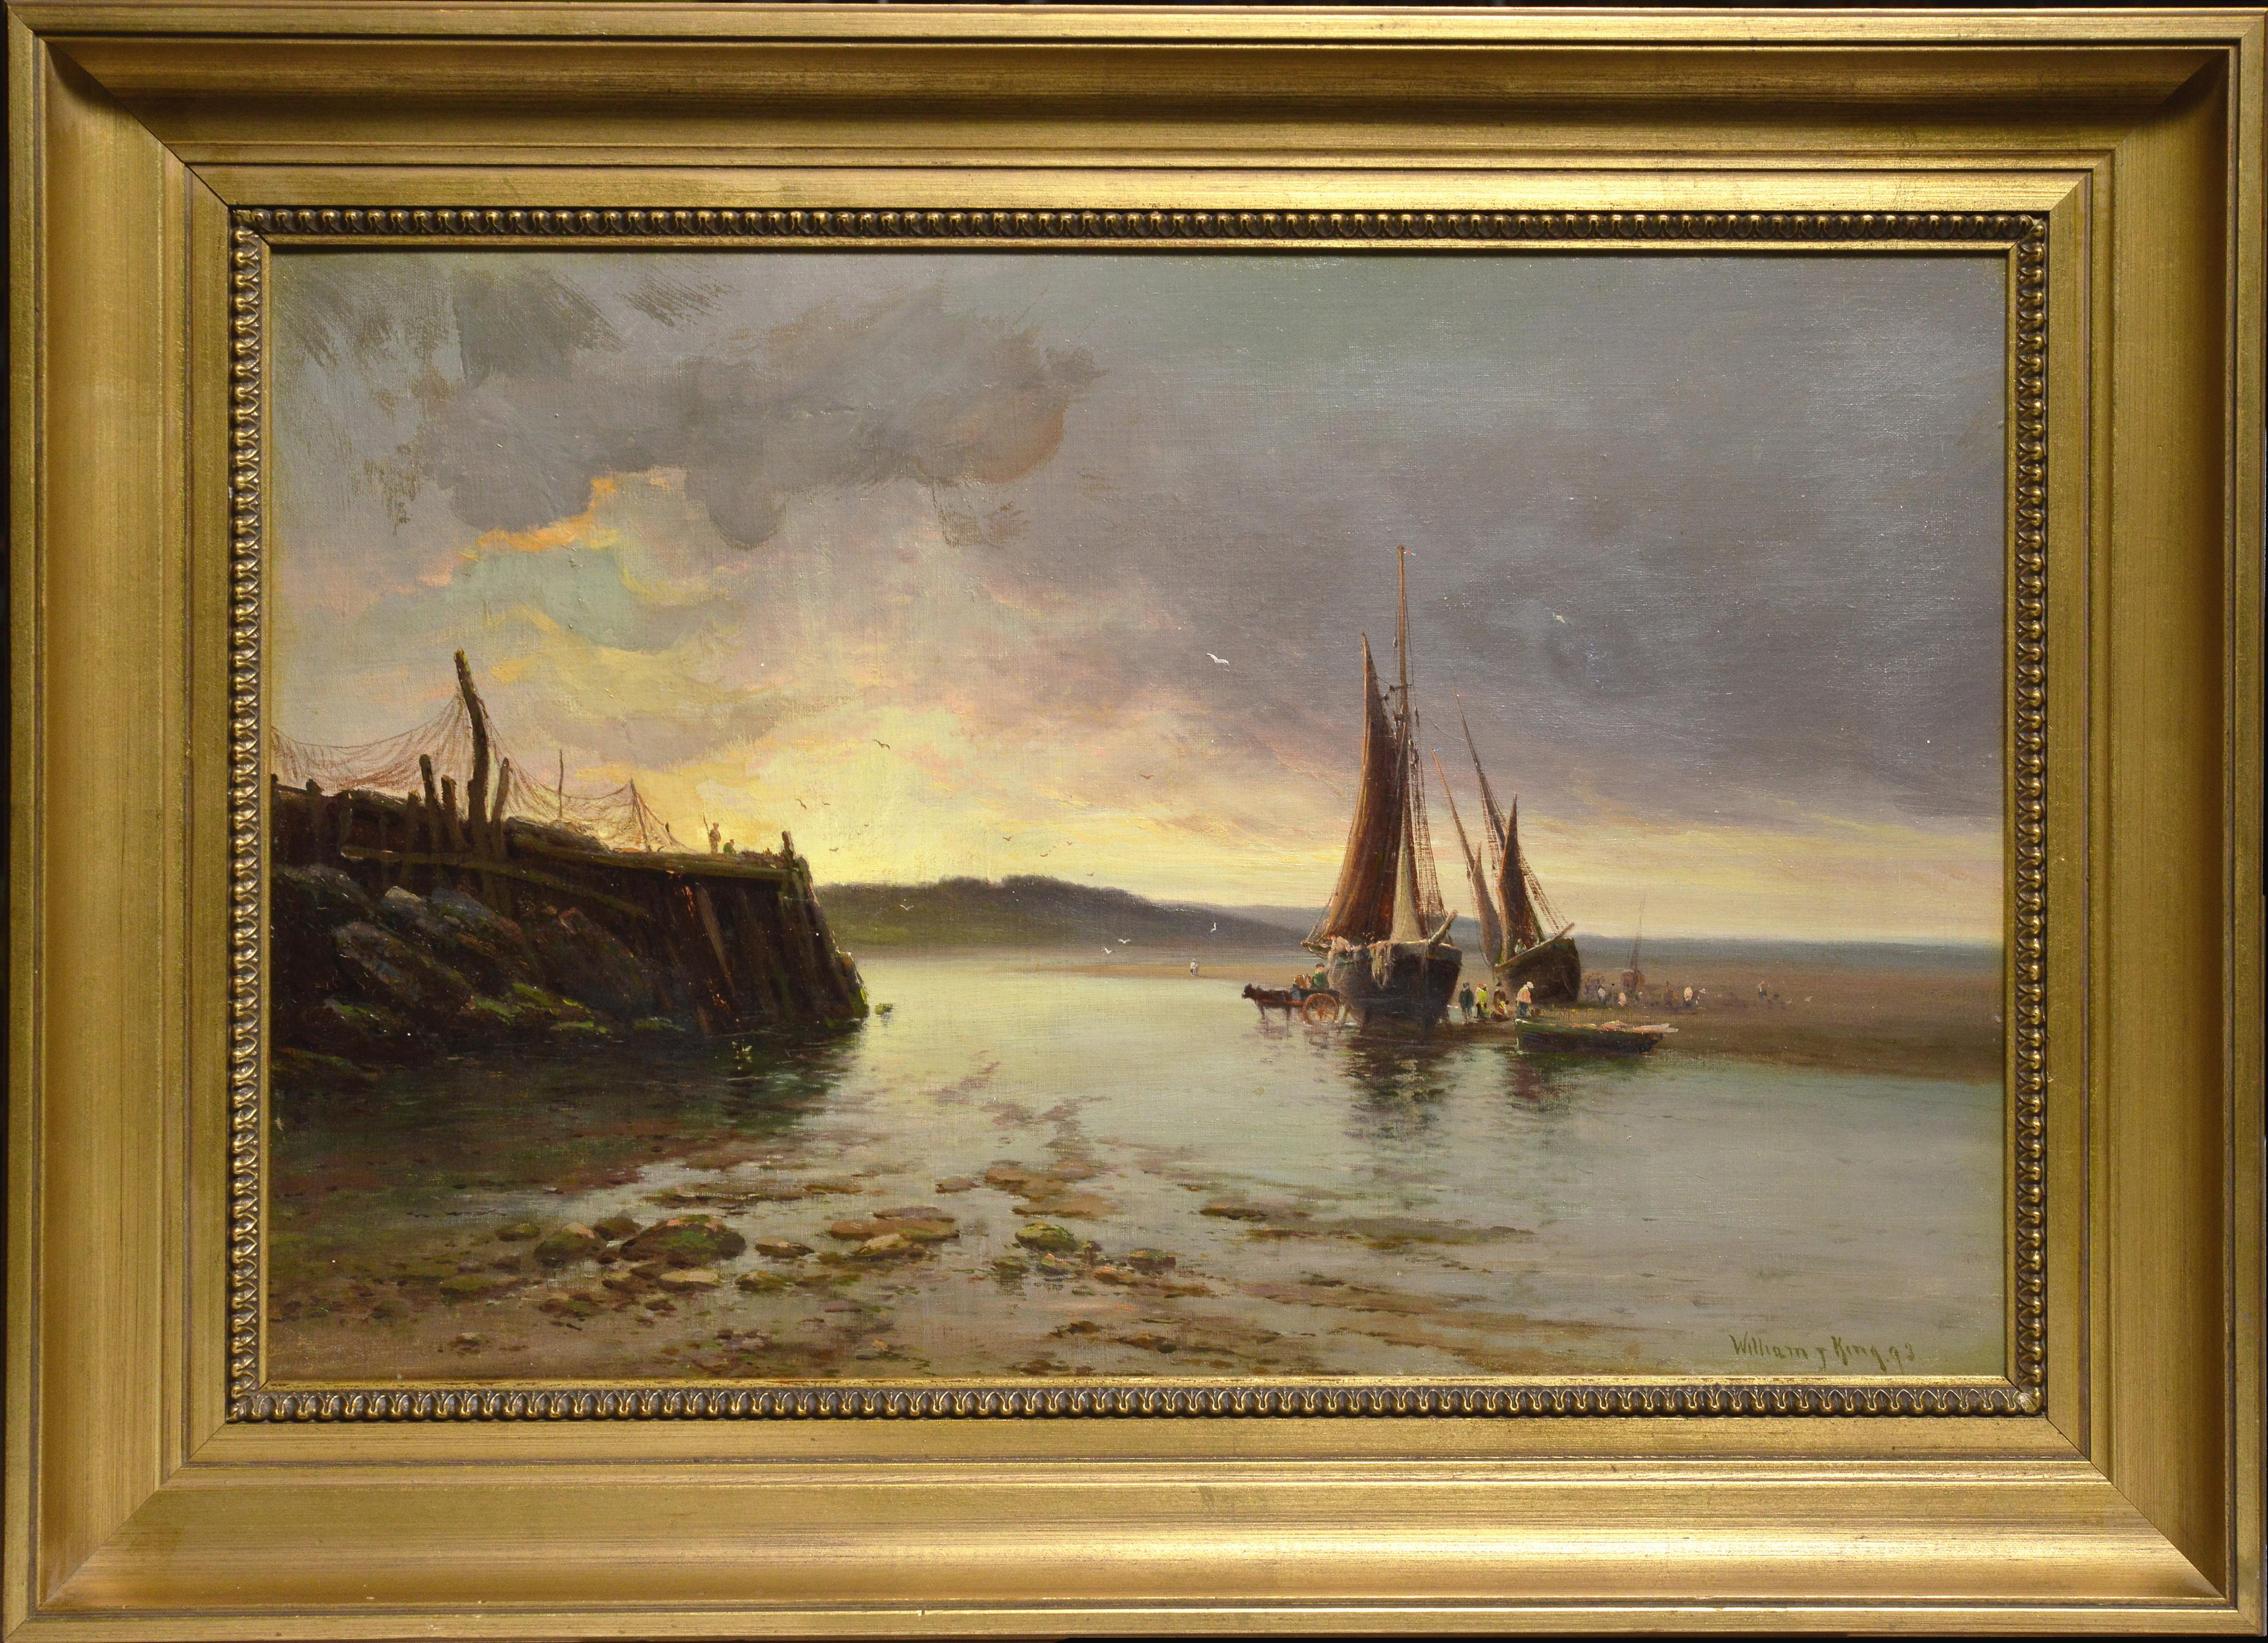 William Joseph King Landscape Painting - Low Tide Mussel Harvest in Dramatic Sunrise 1893 British Seascape Signed Framed